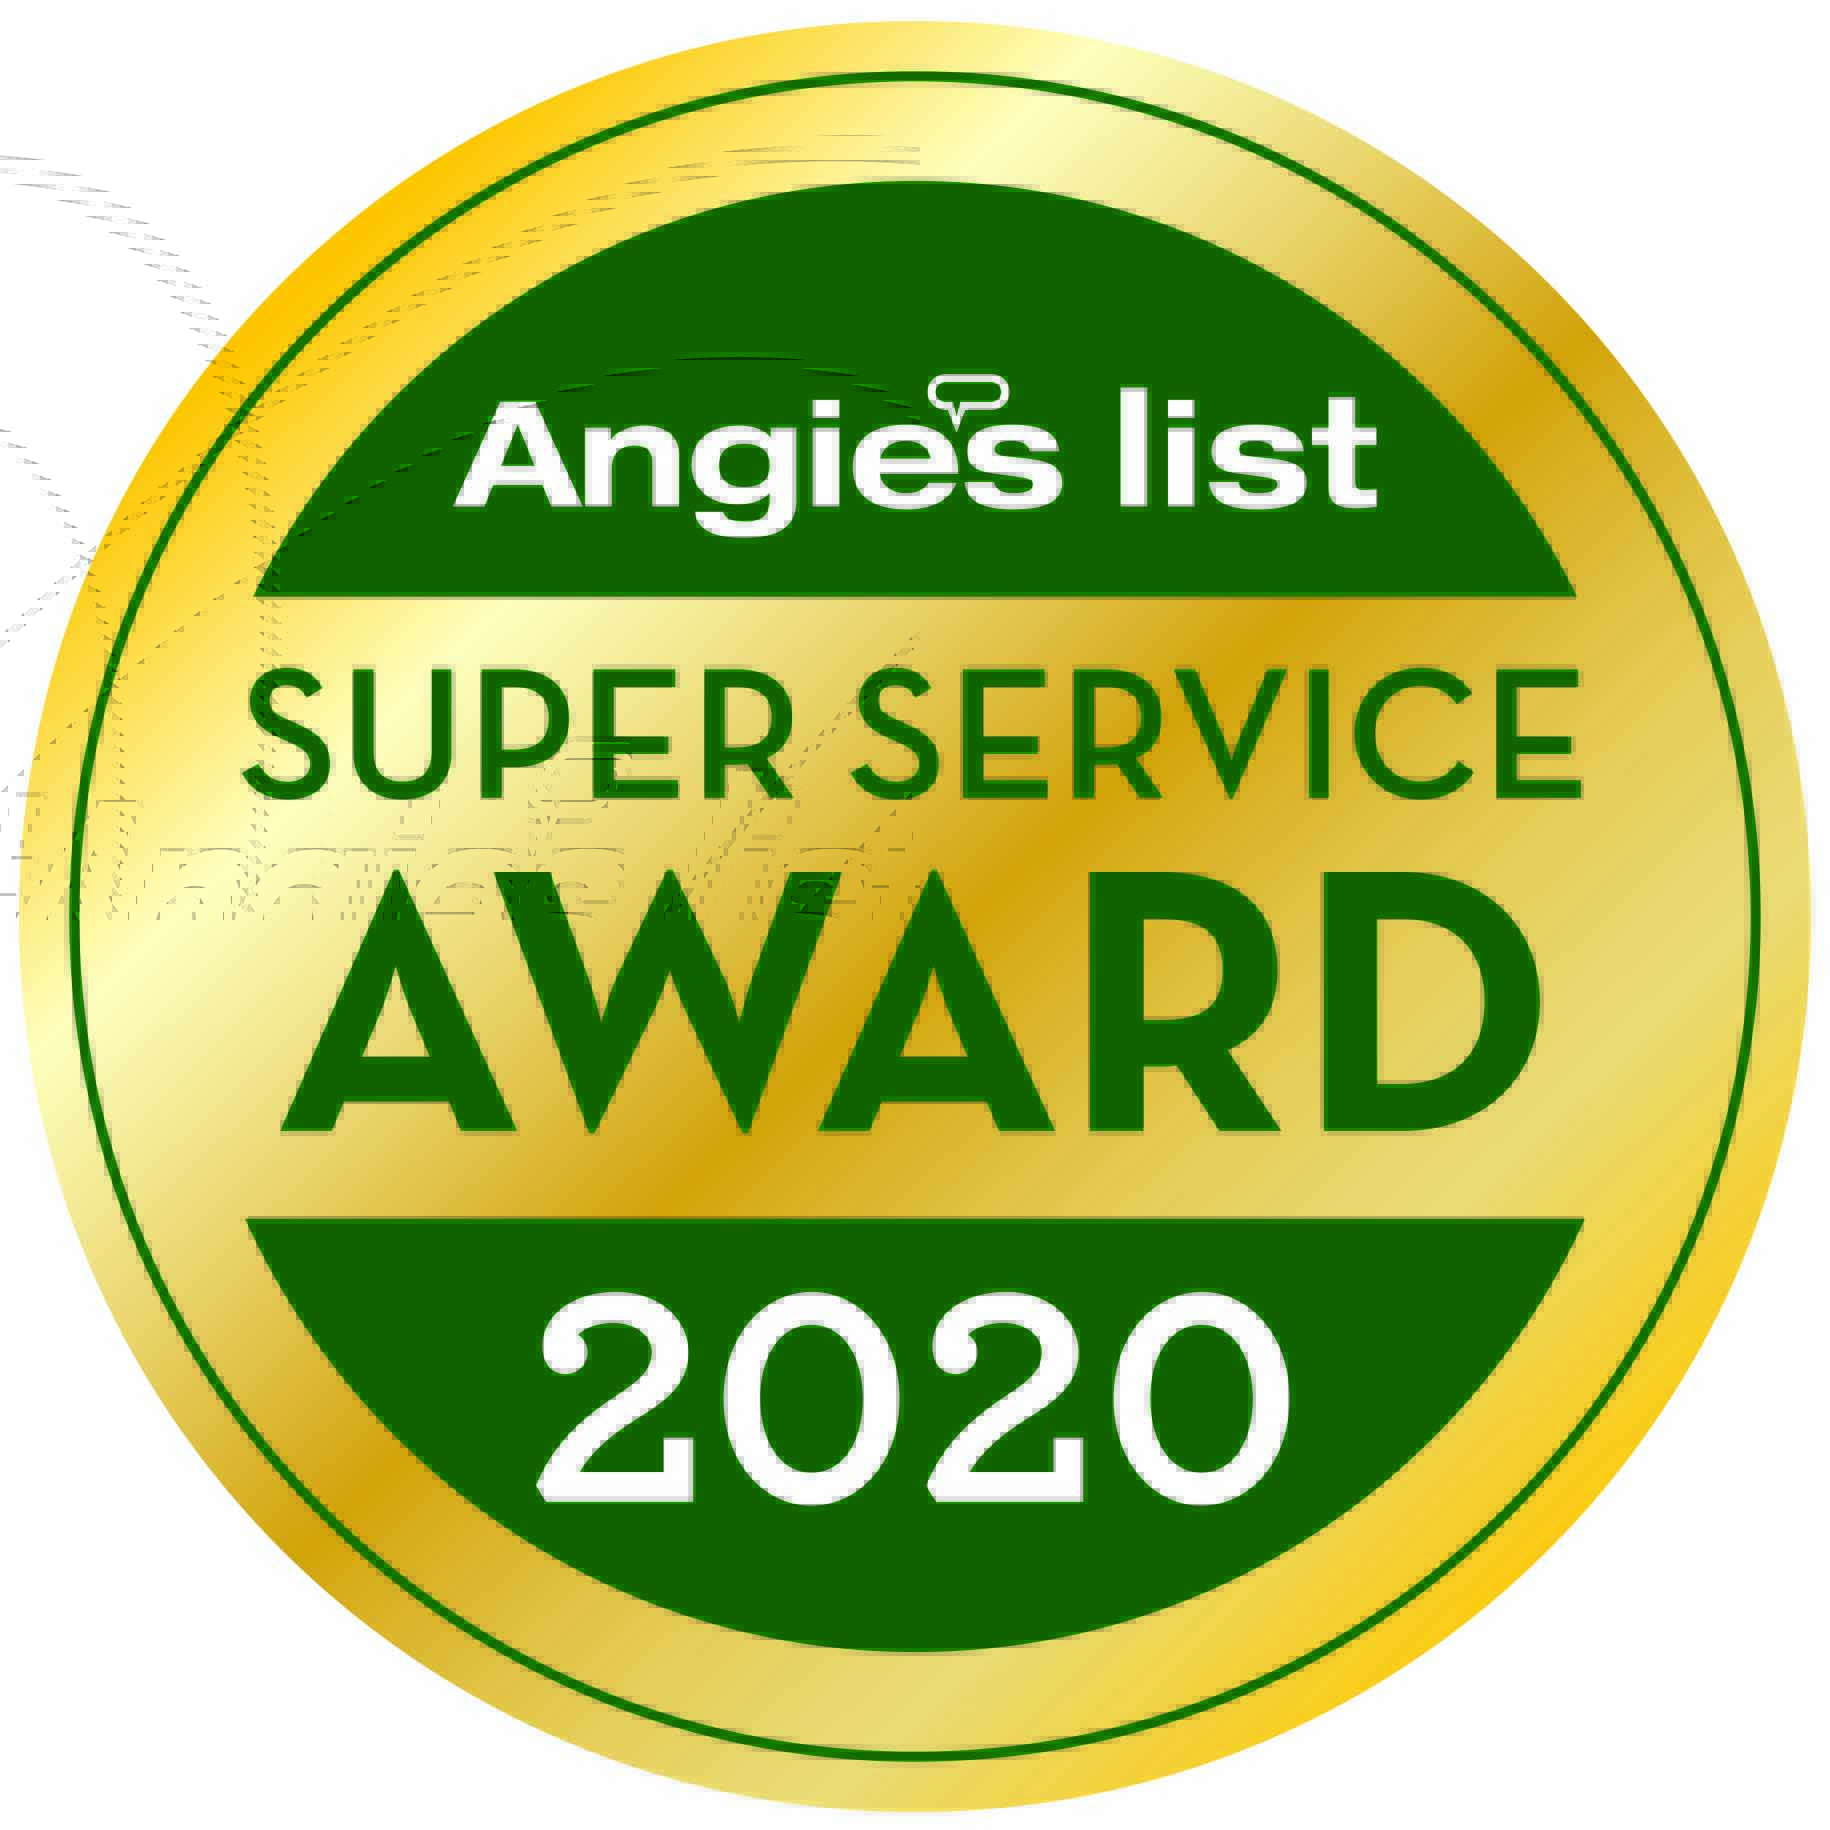 Angie's Super Service Award